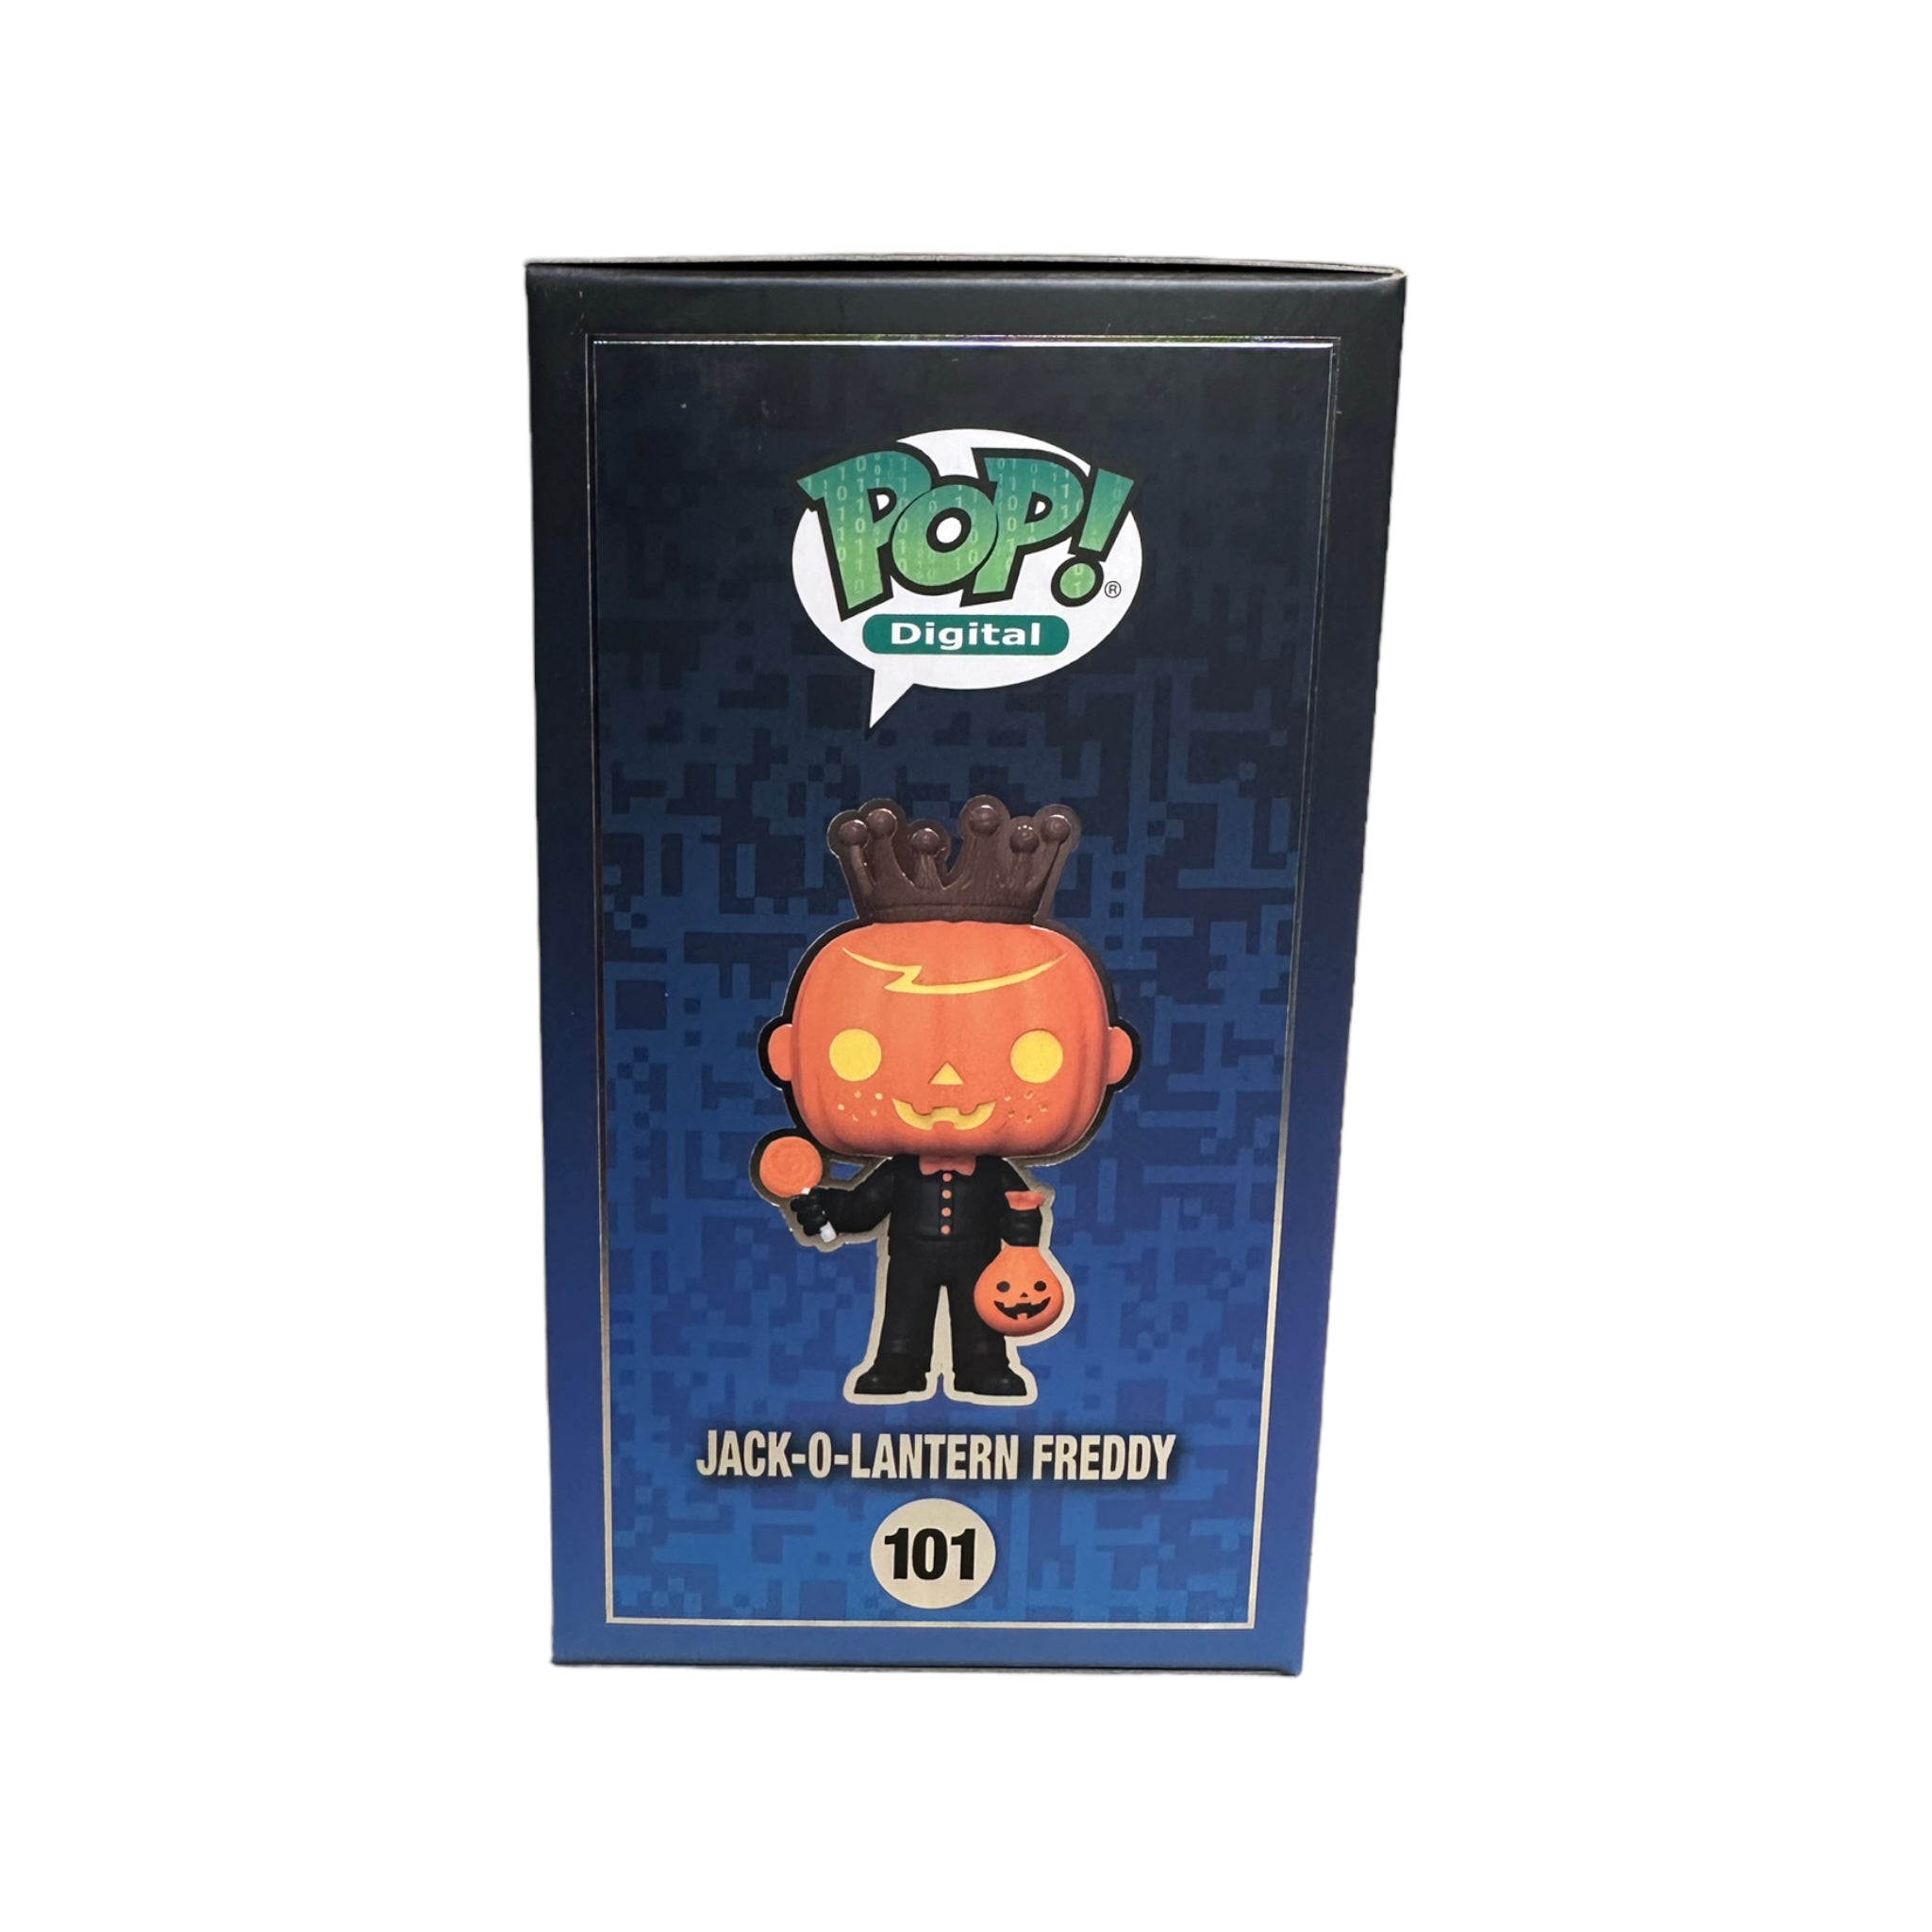 Jack-O-Lantern Freddy #101 Funko Pop! - Halloween Series 2 - NFT Release Exclusive LE3000 Pcs - Condition 9/10